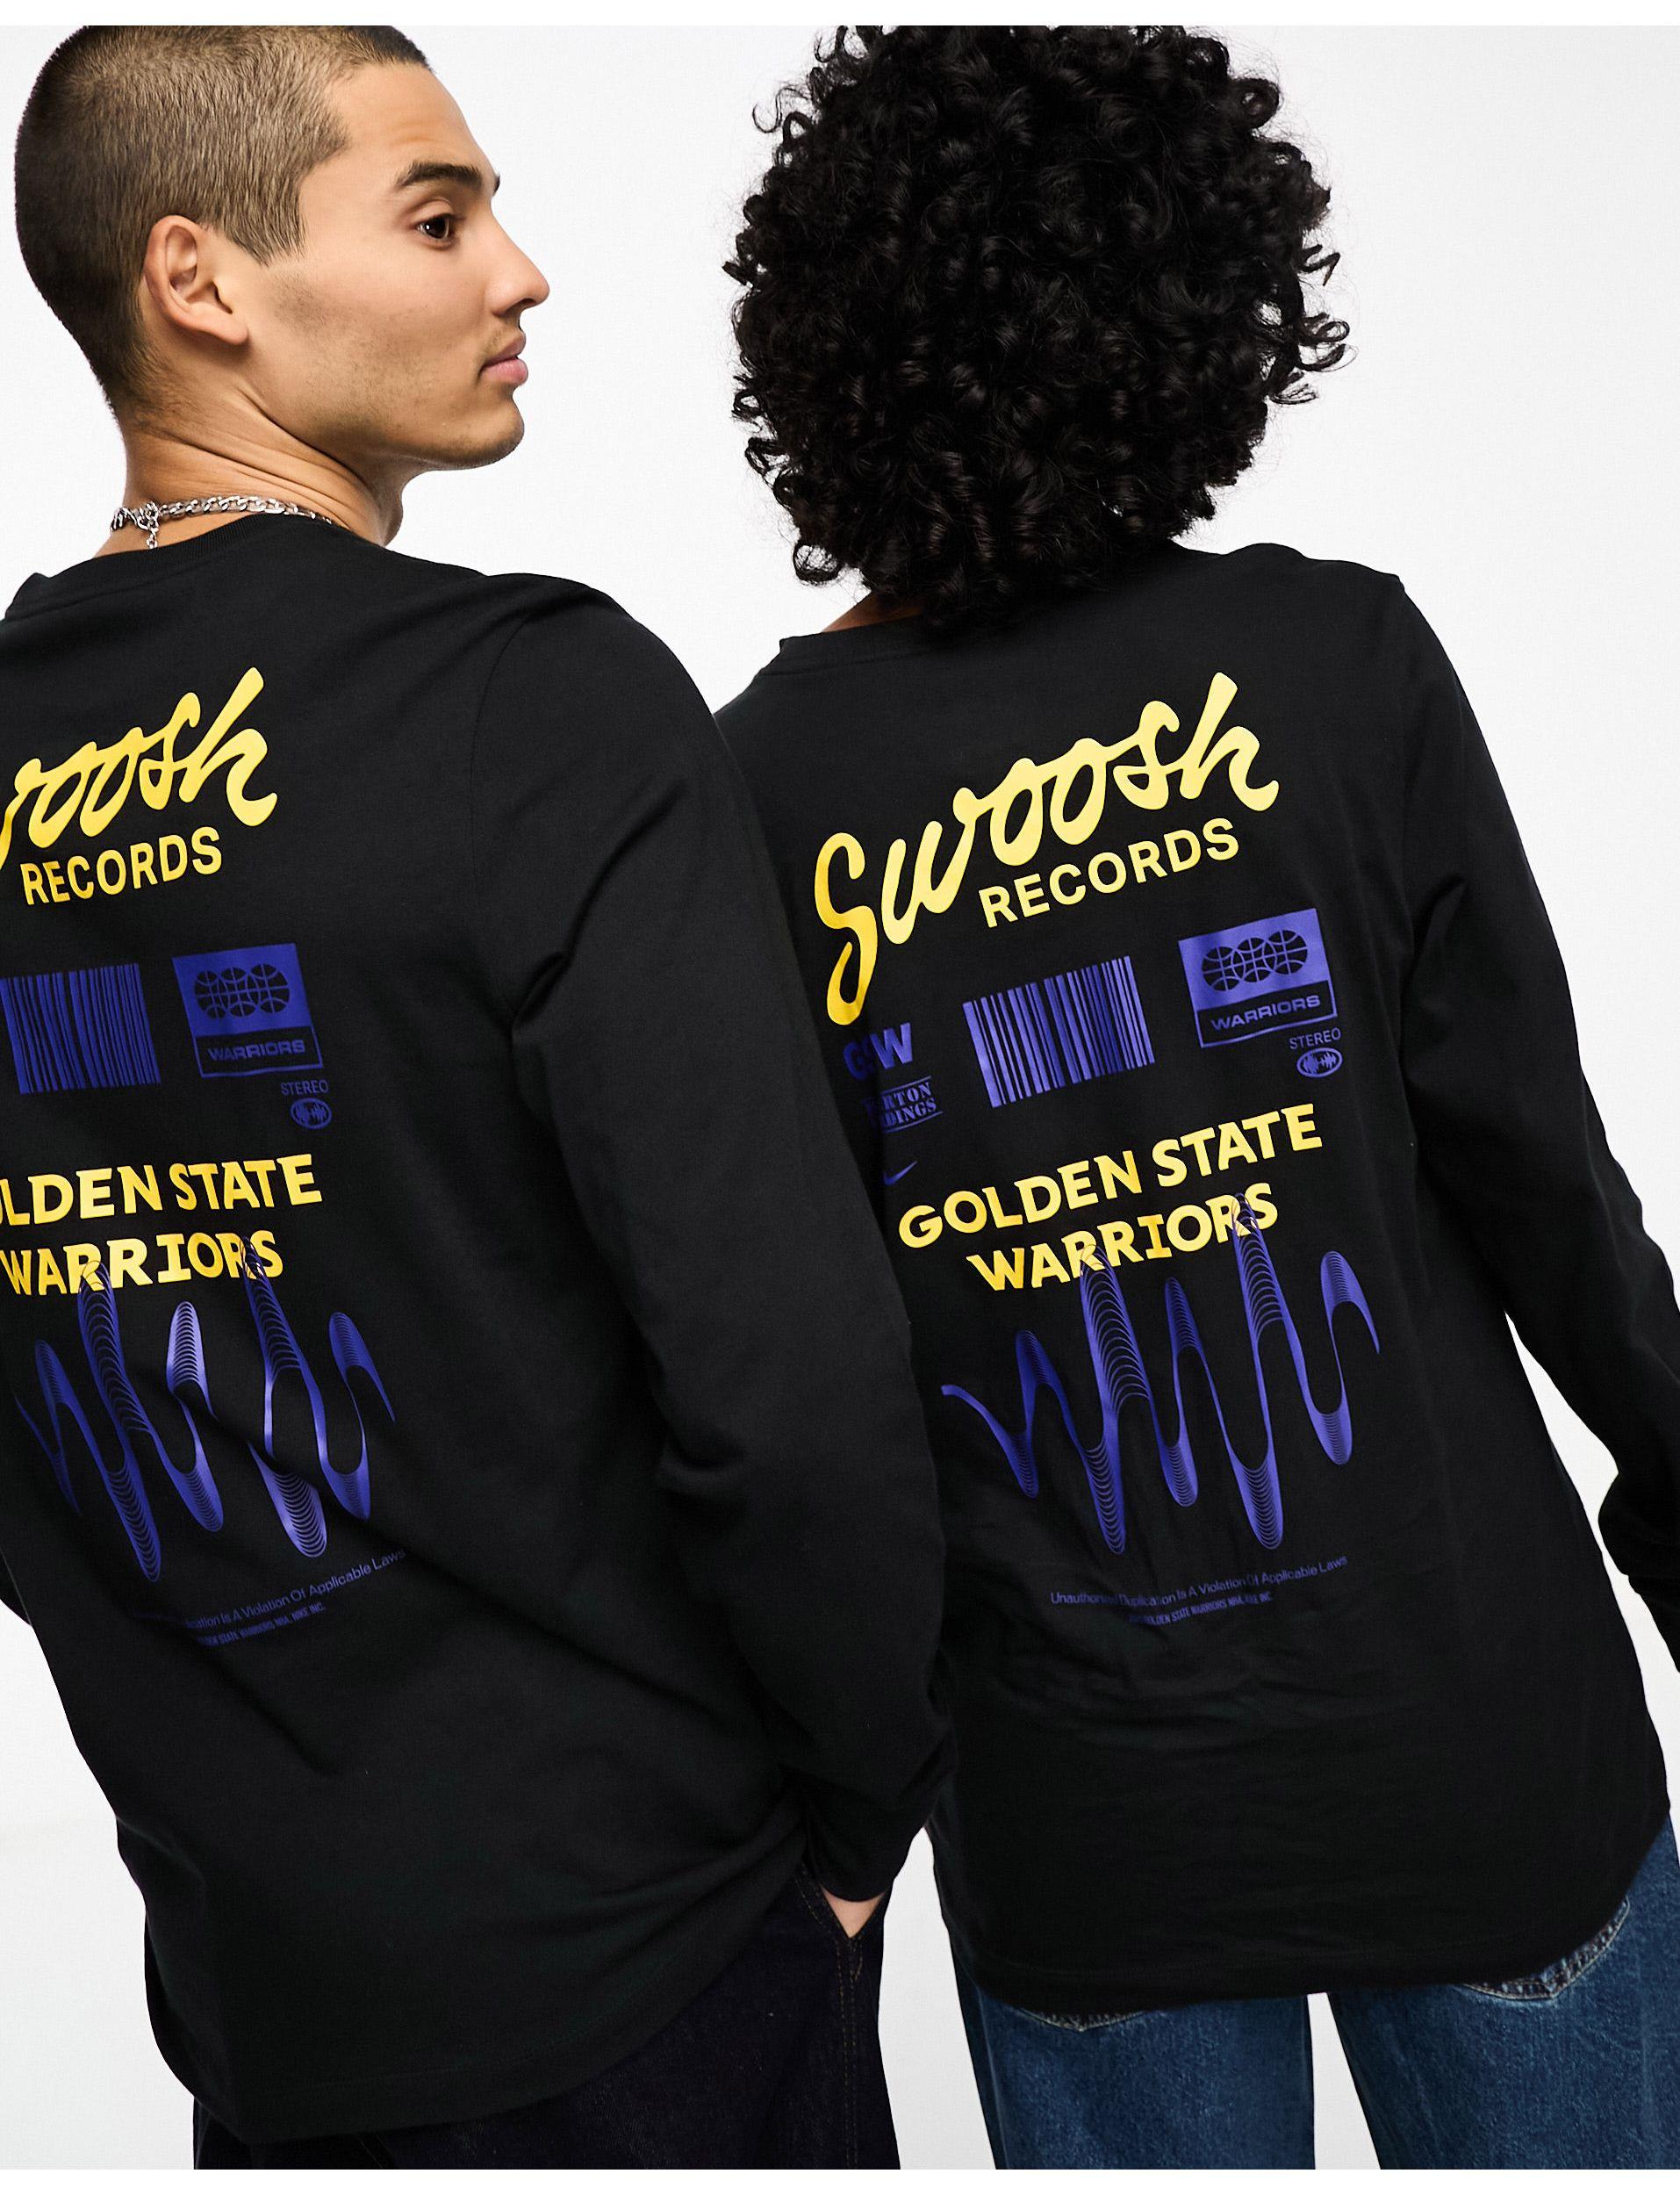 Golden State Warriors Essential Max90 Men's Nike NBA Long-Sleeve T-Shirt.